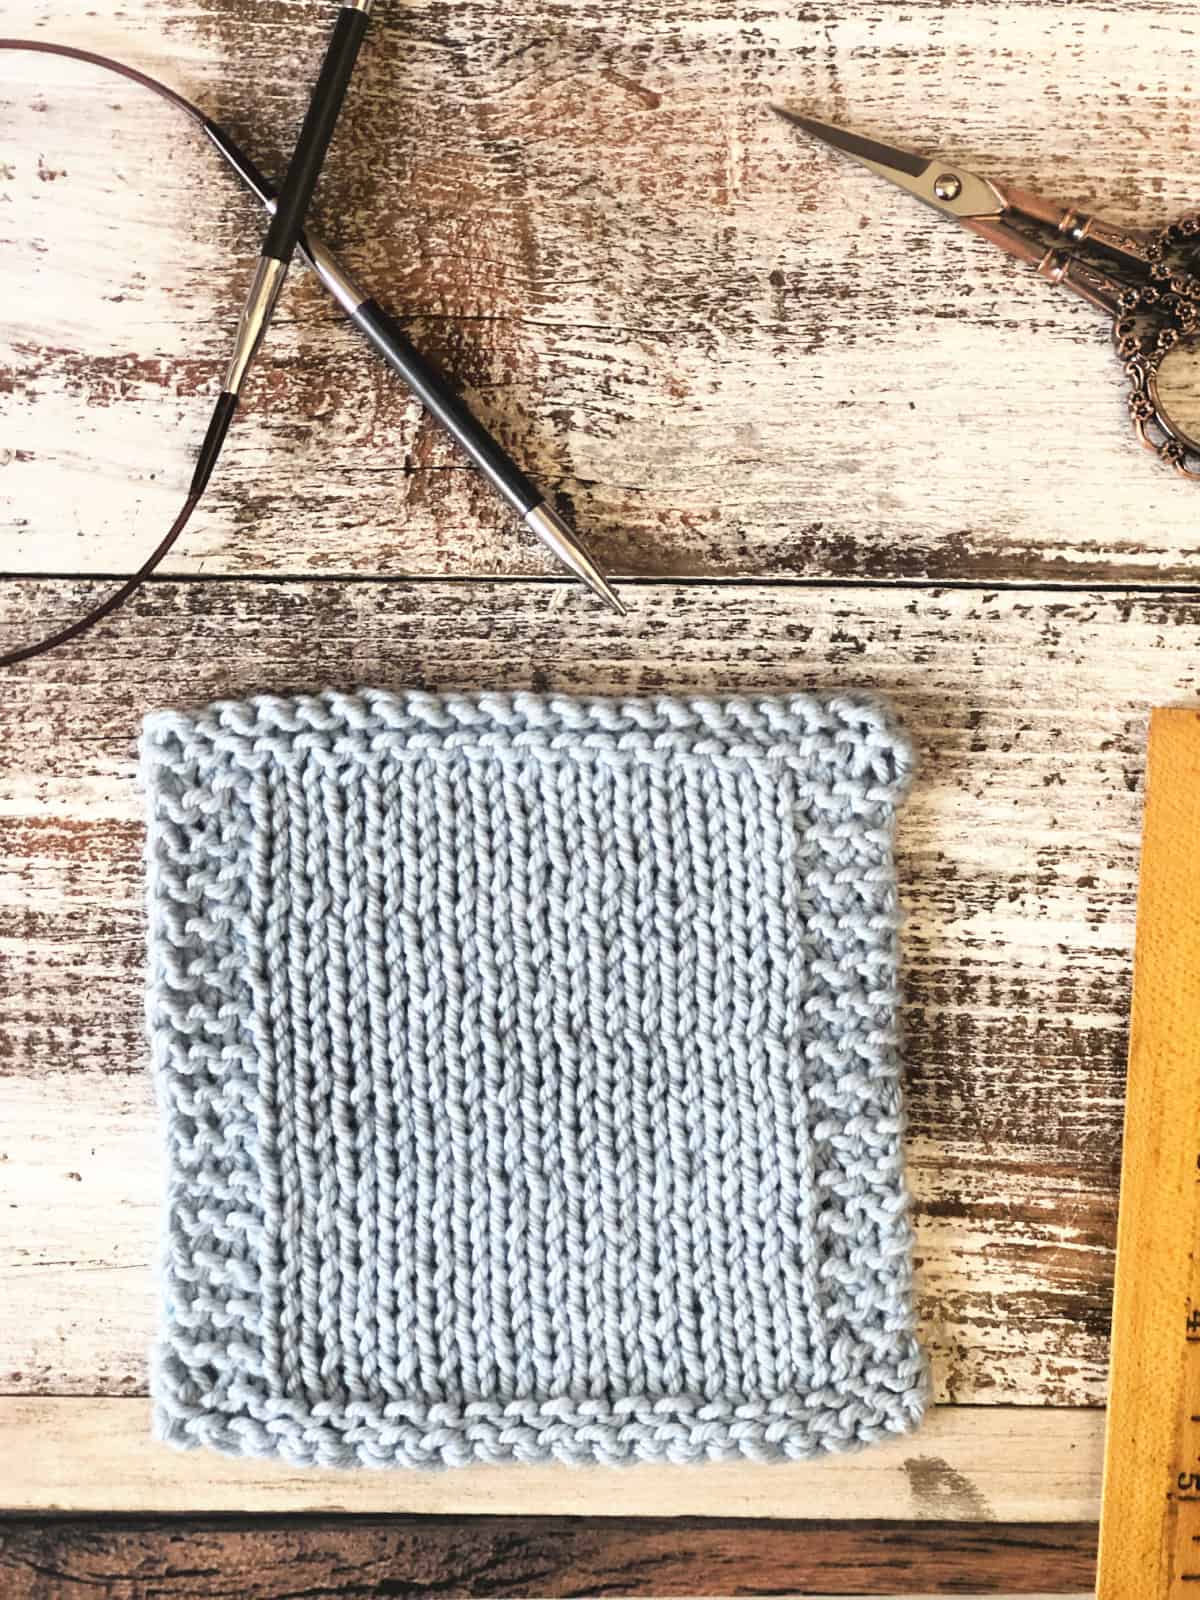 Knitting needle, scissors, ruler next to blue knit coaster.